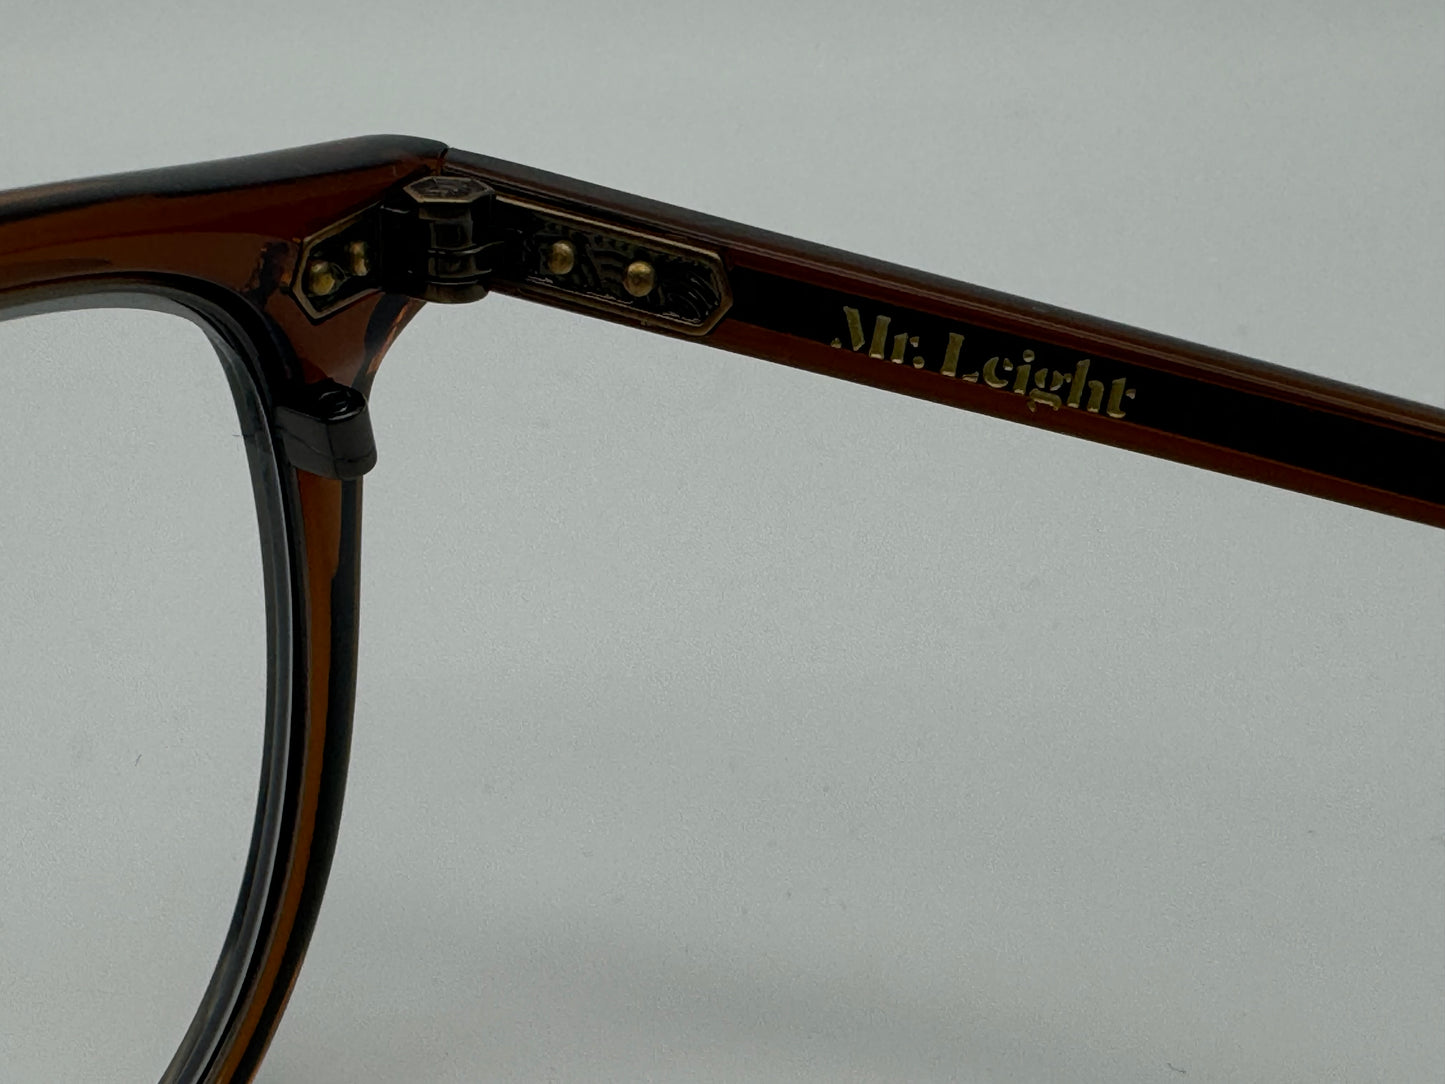 Mr. Leight Coopers C 46mm Eyeglass Carmelita / Antique Gold Titanium Limited Japan NEW